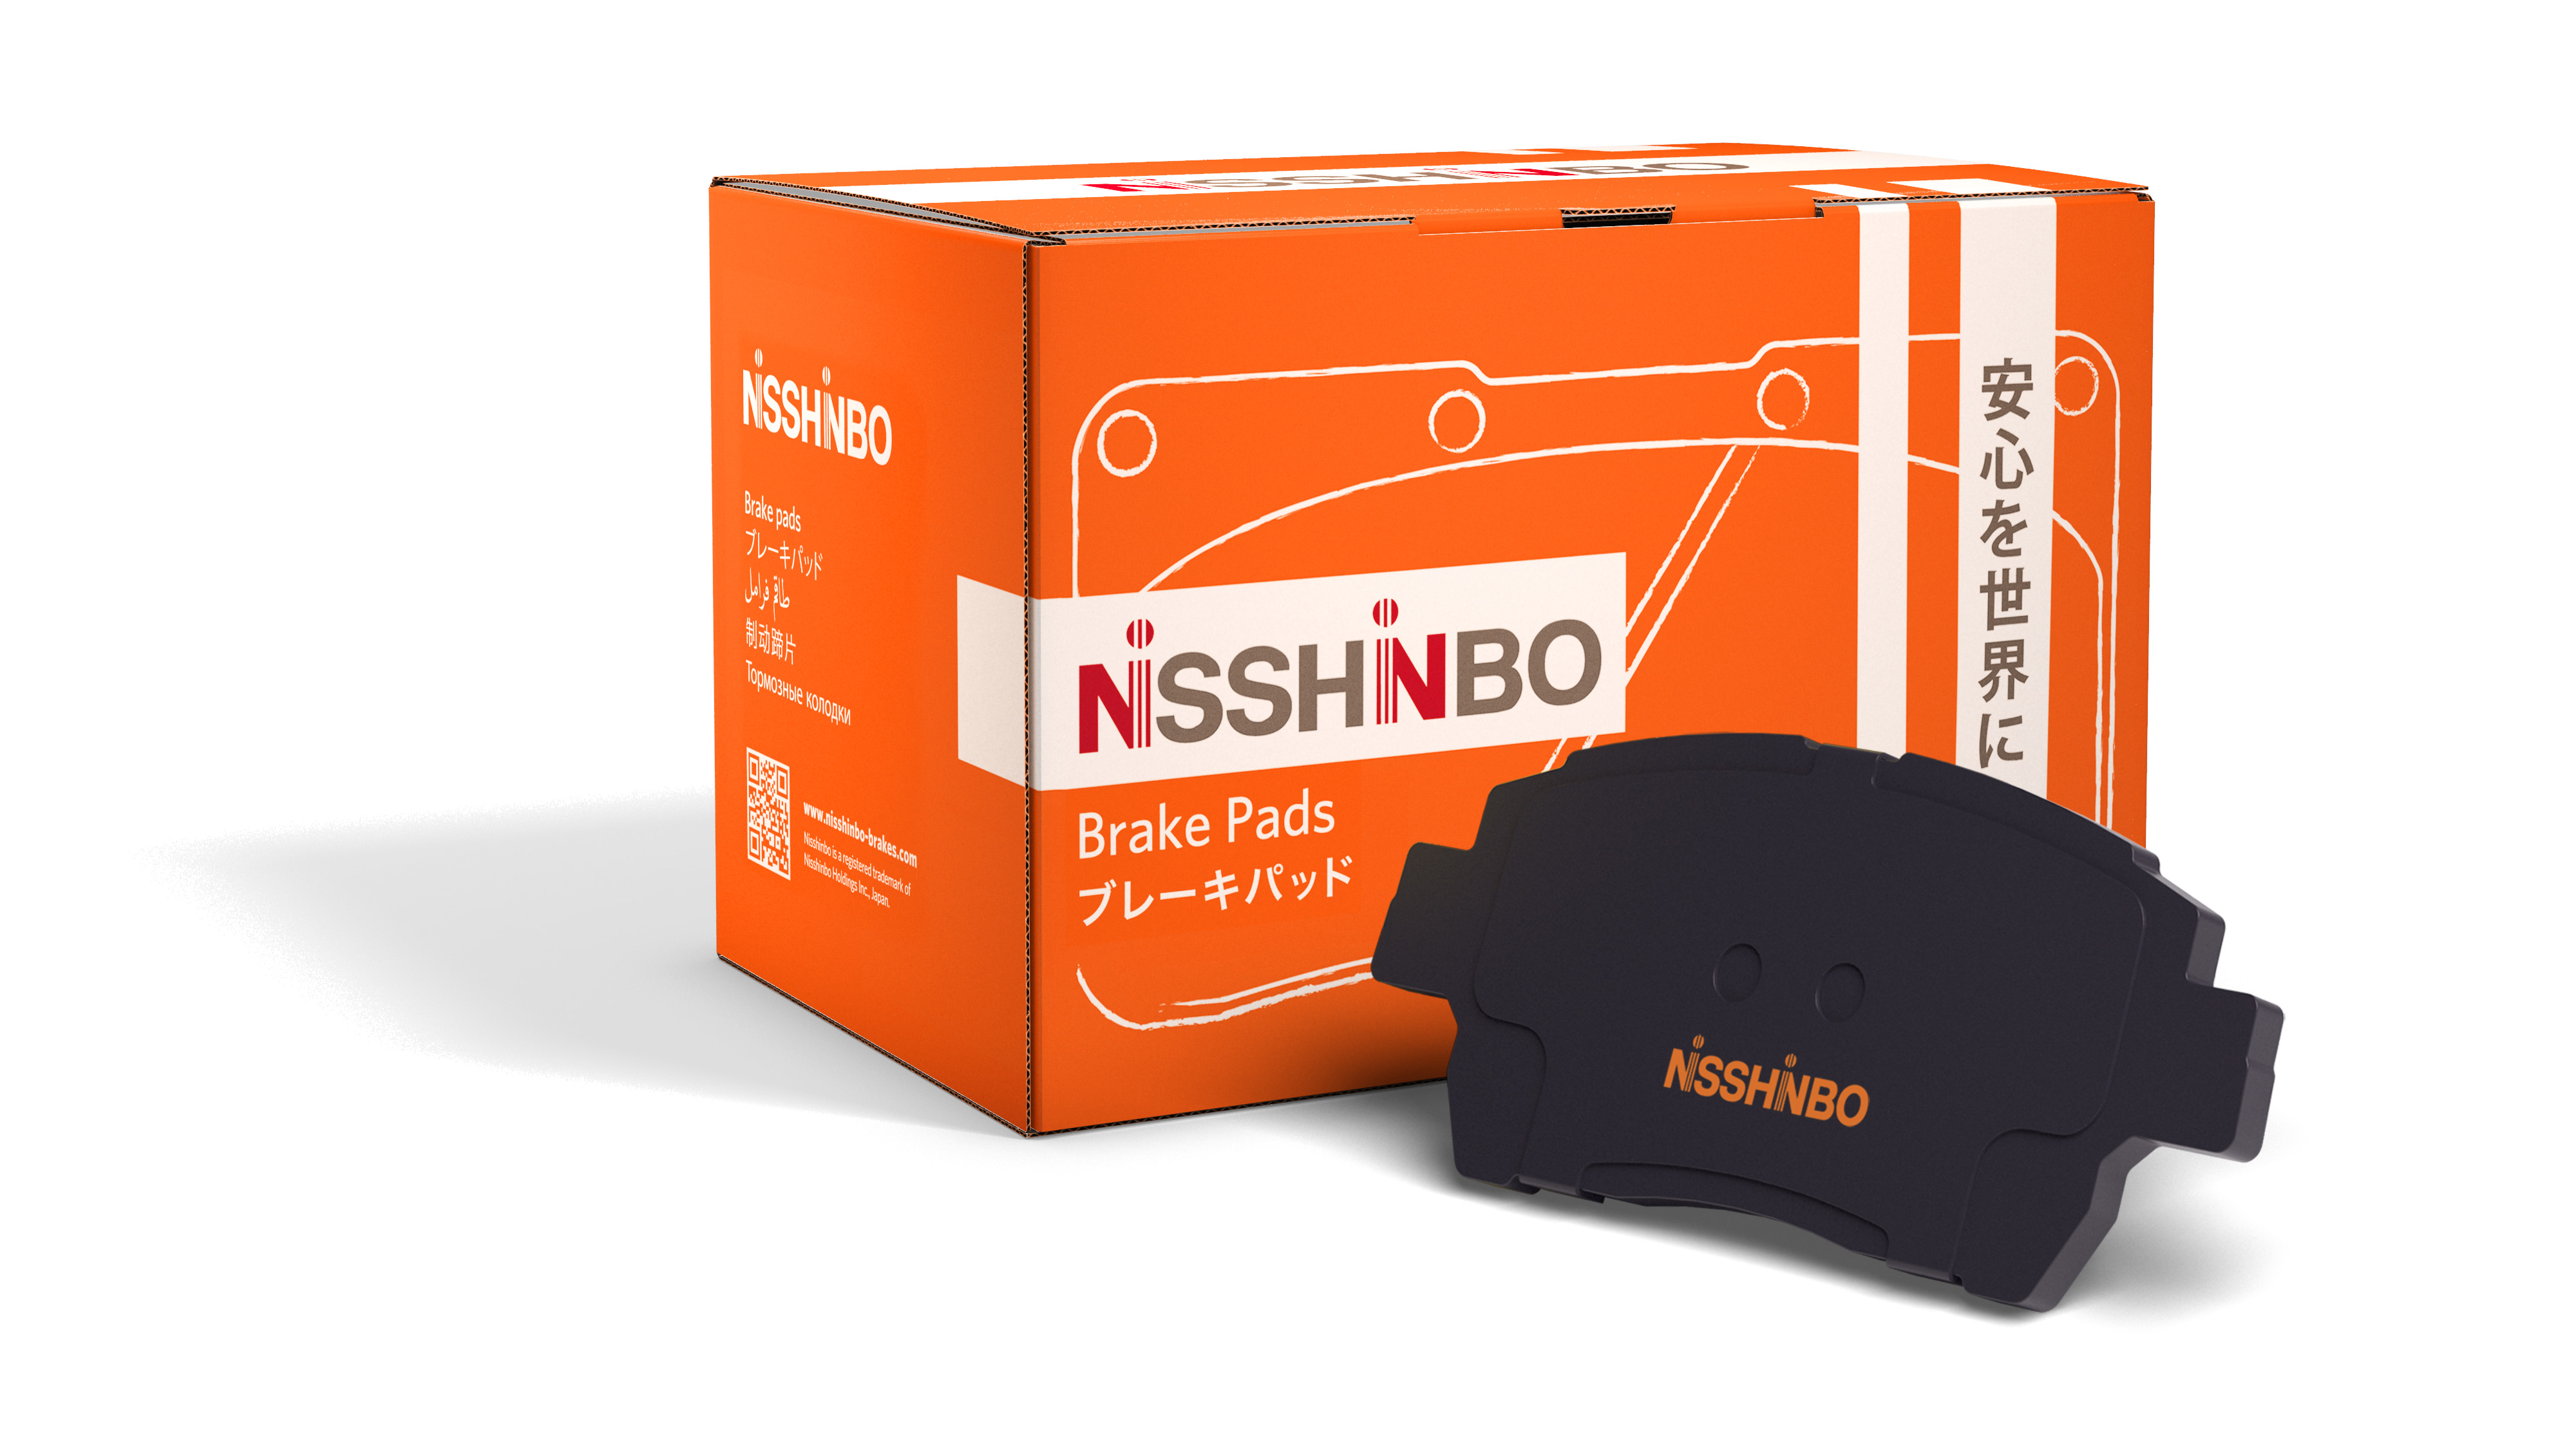 TMD Friction расширяет ассортимент брендом Nisshinbo